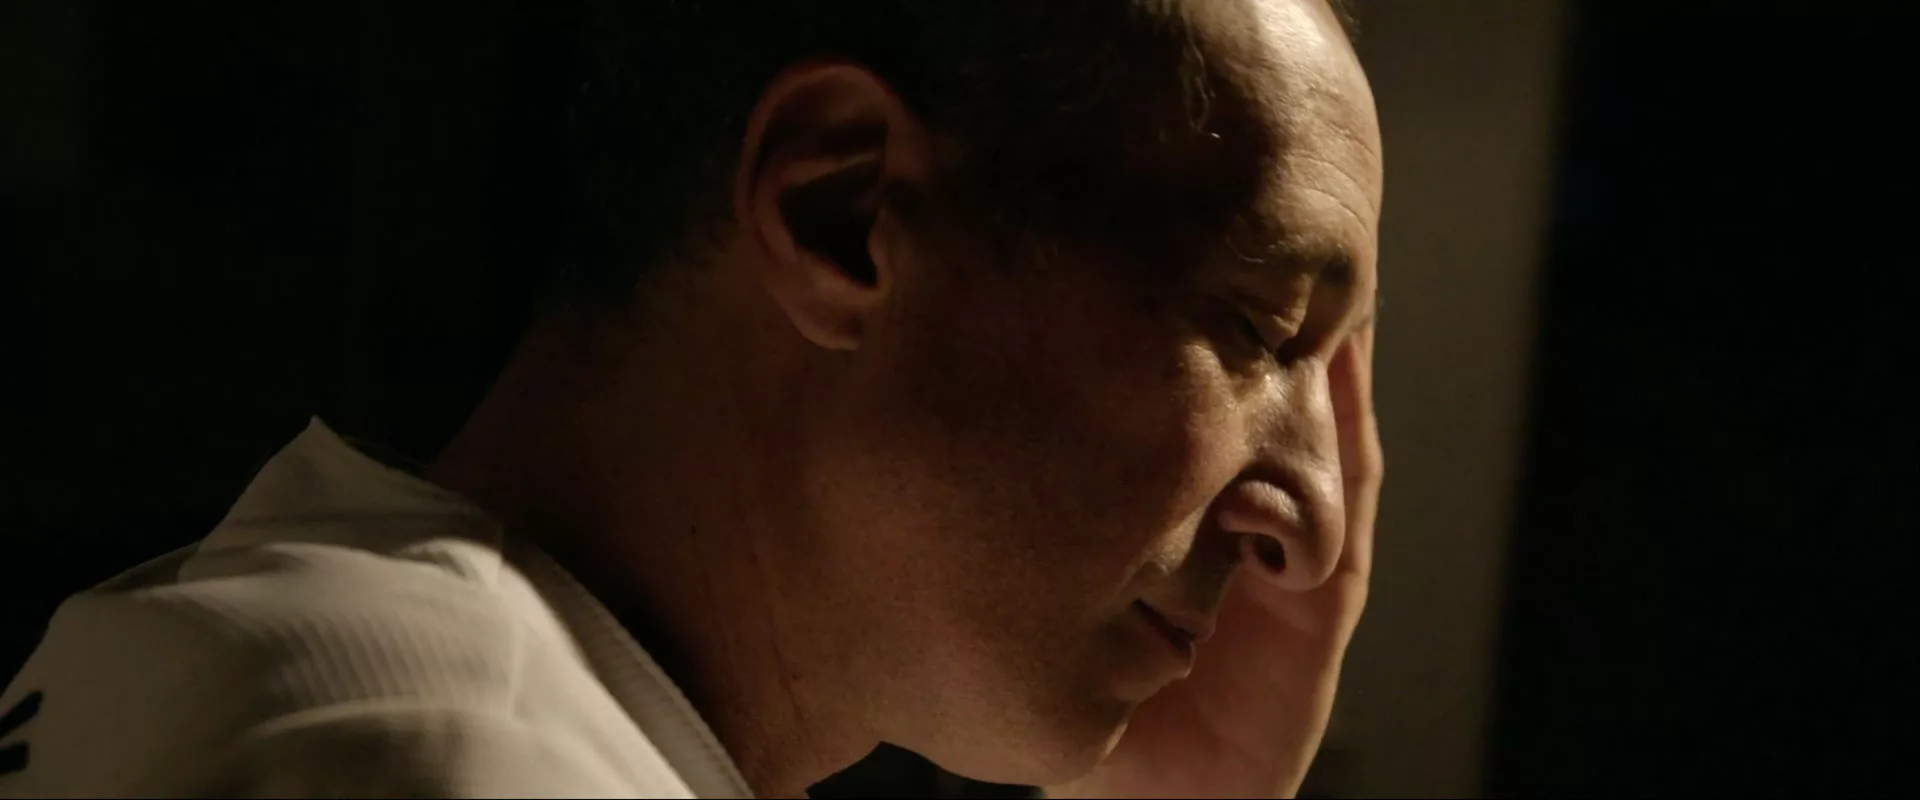 A pensive man (Greg Laemmle) looking down in profile